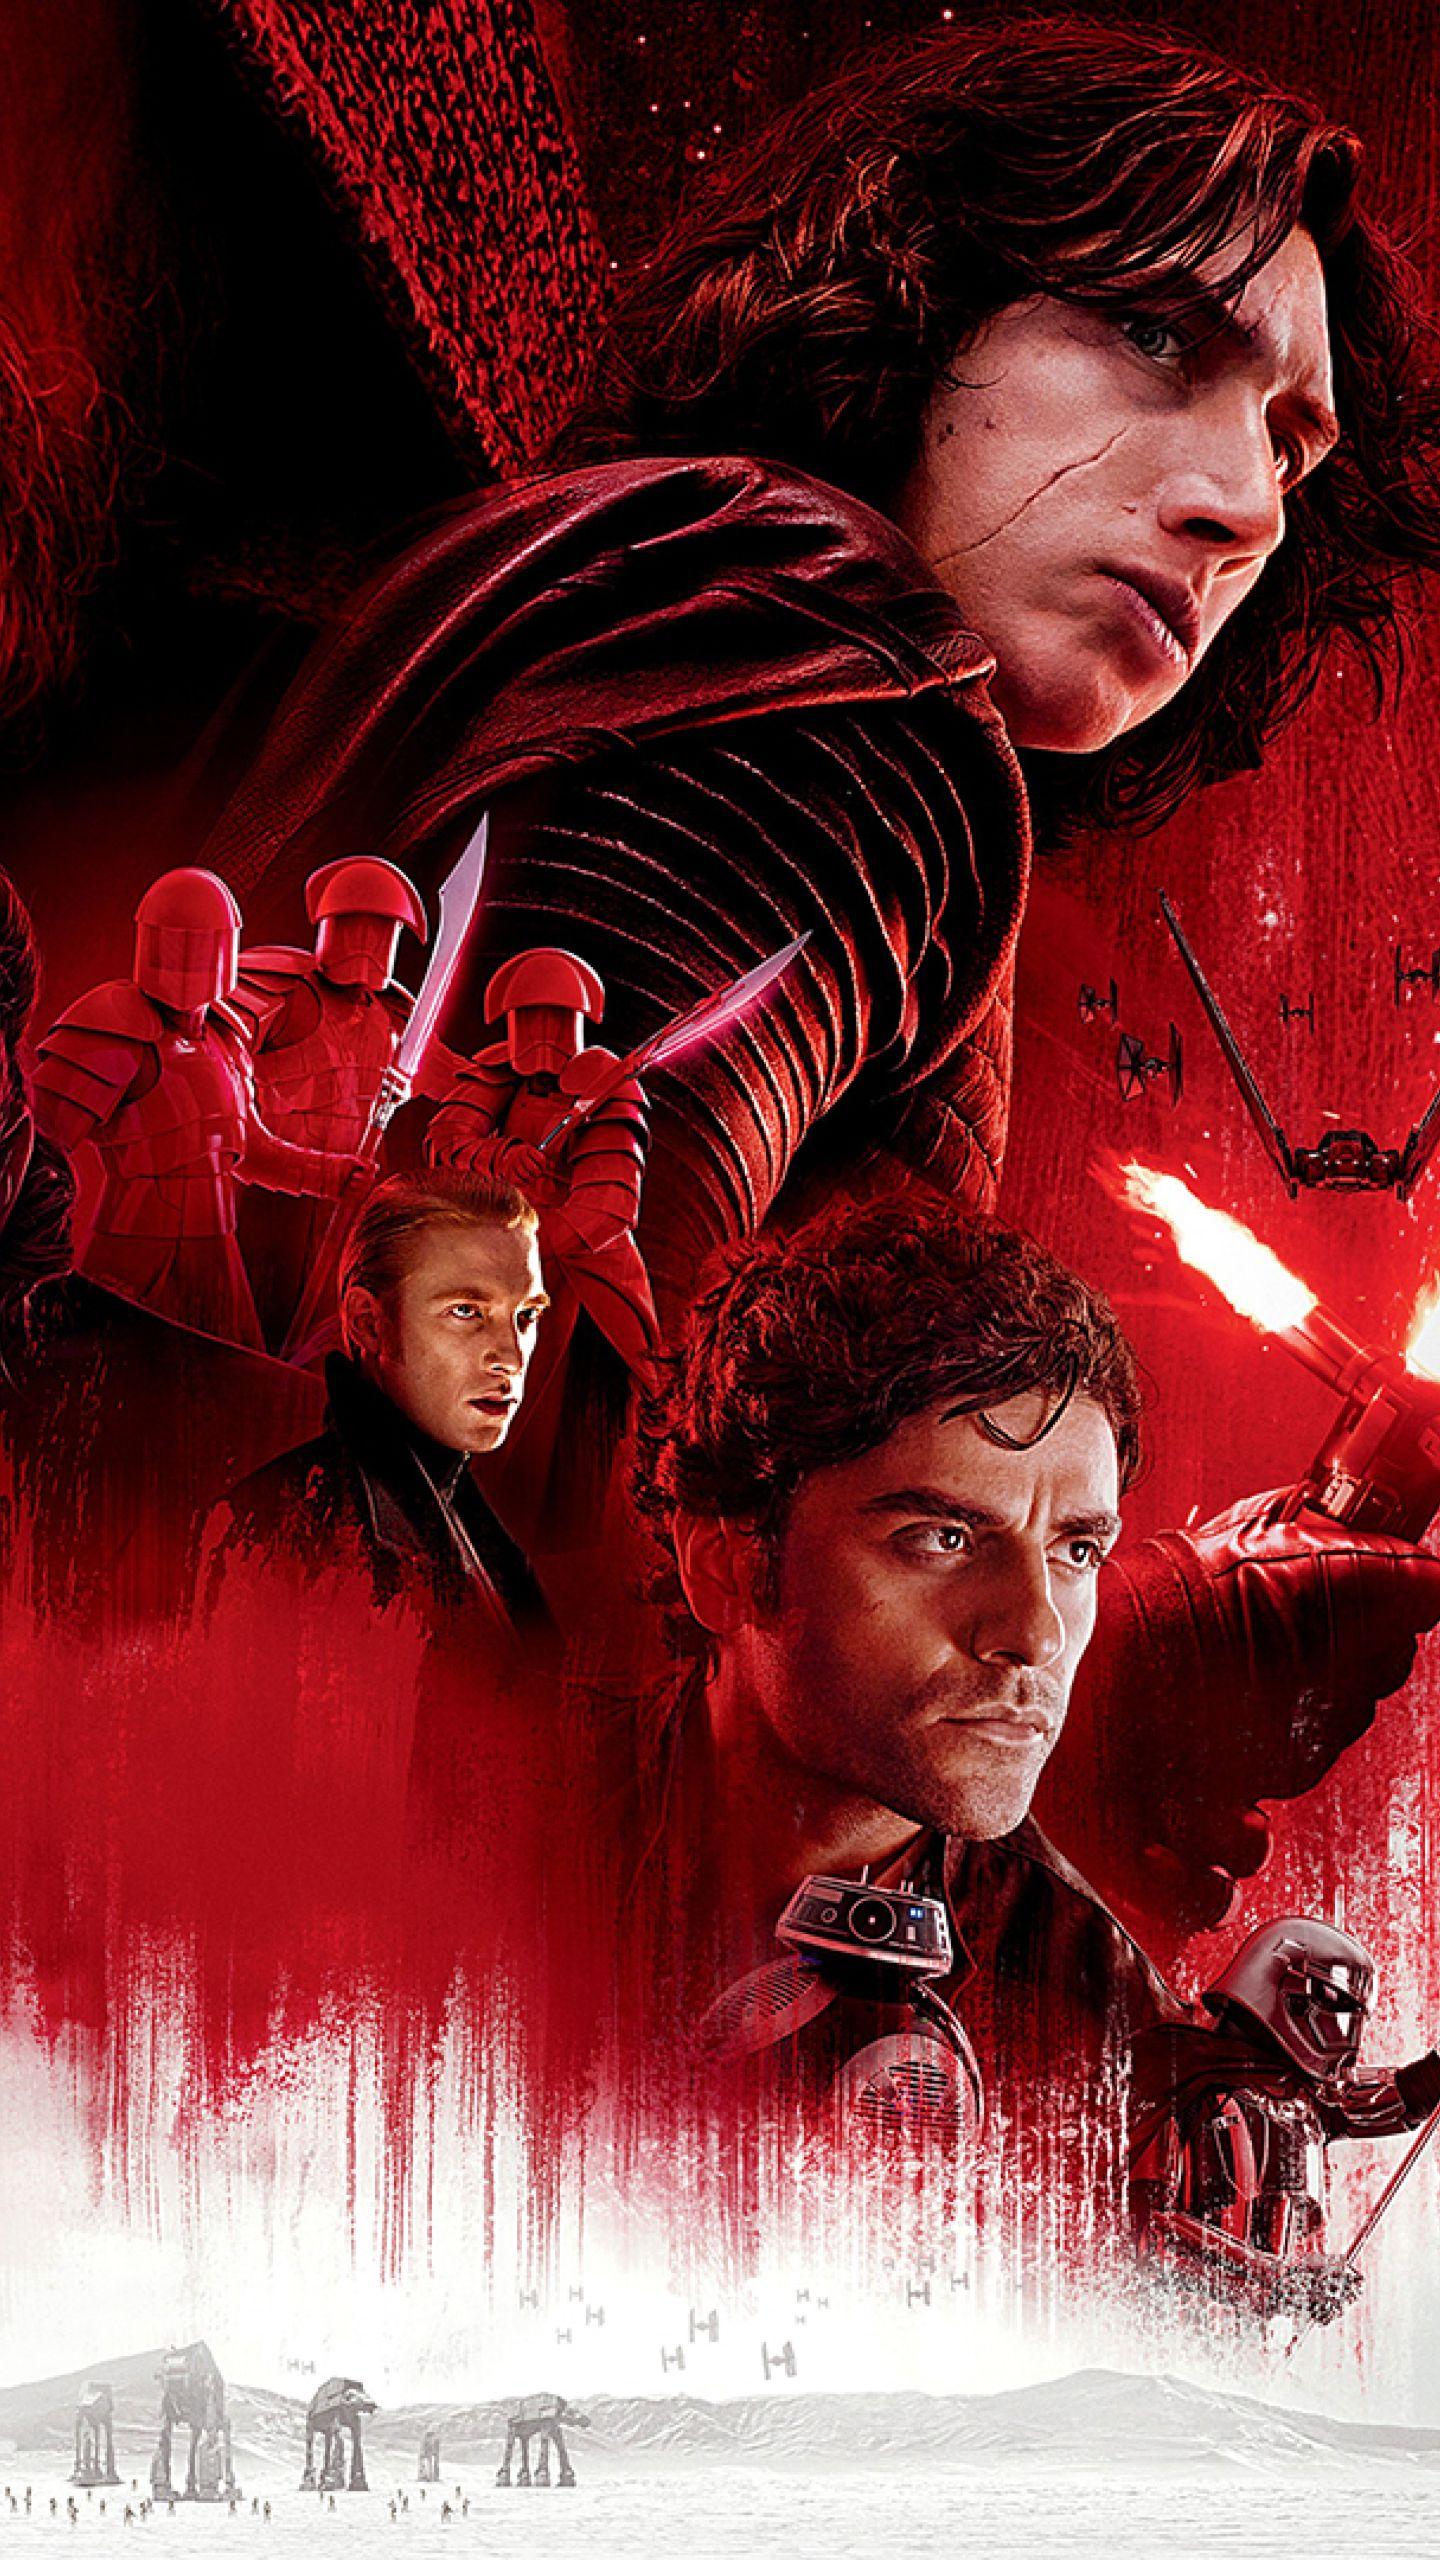 Download Star Wars 8 Cast Poster 1440x2560 Resolution, Full HD